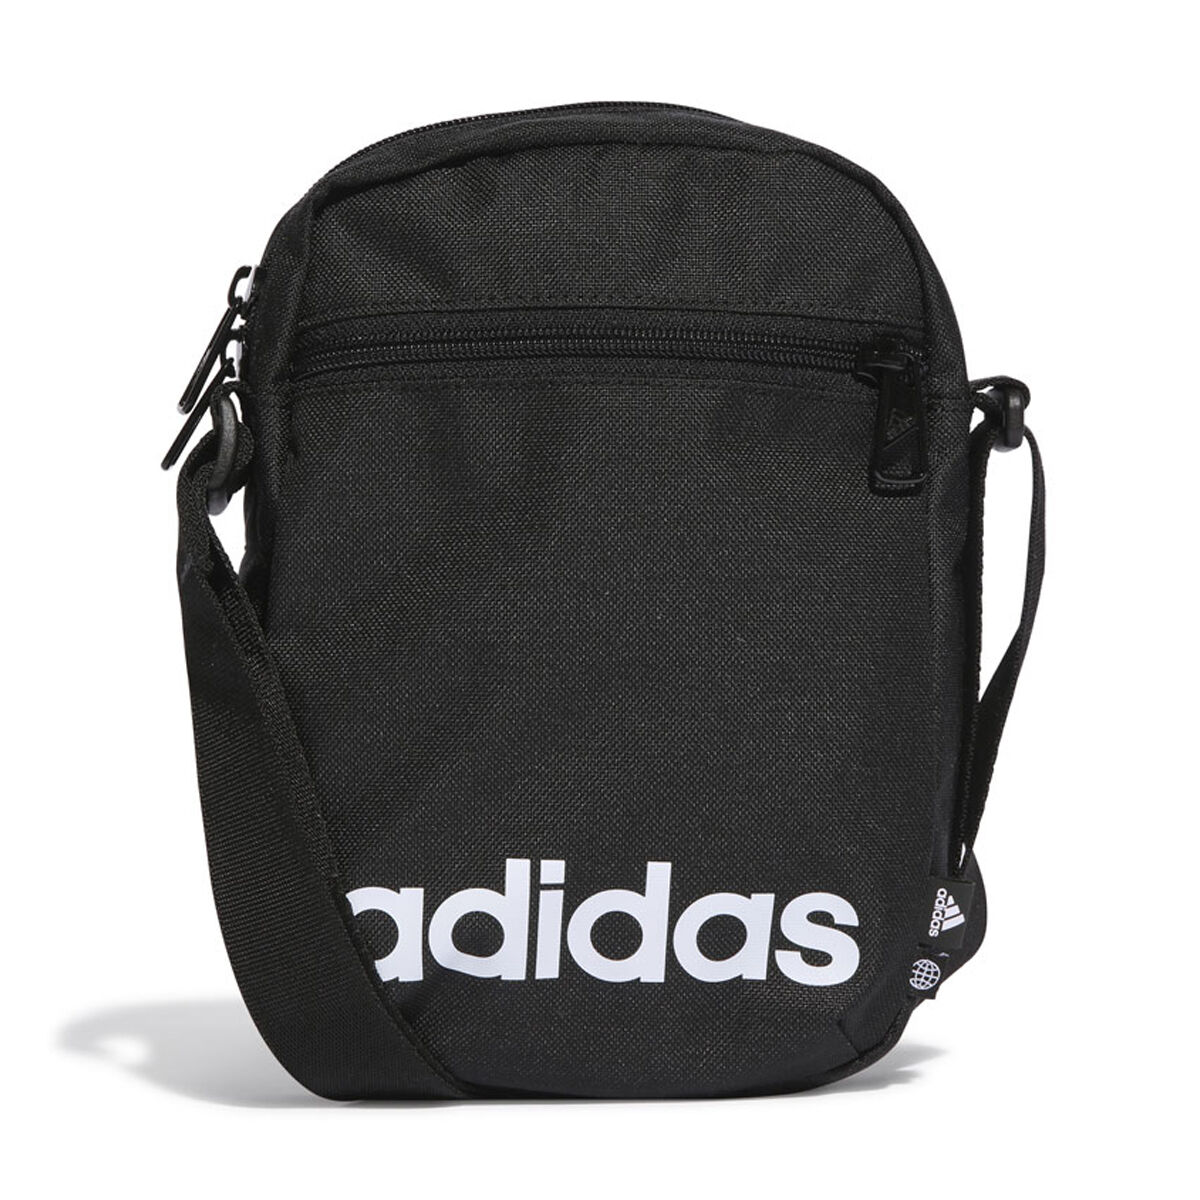 Sports Bags & Backpacks - Nike, adidas, PUMA & more - rebel